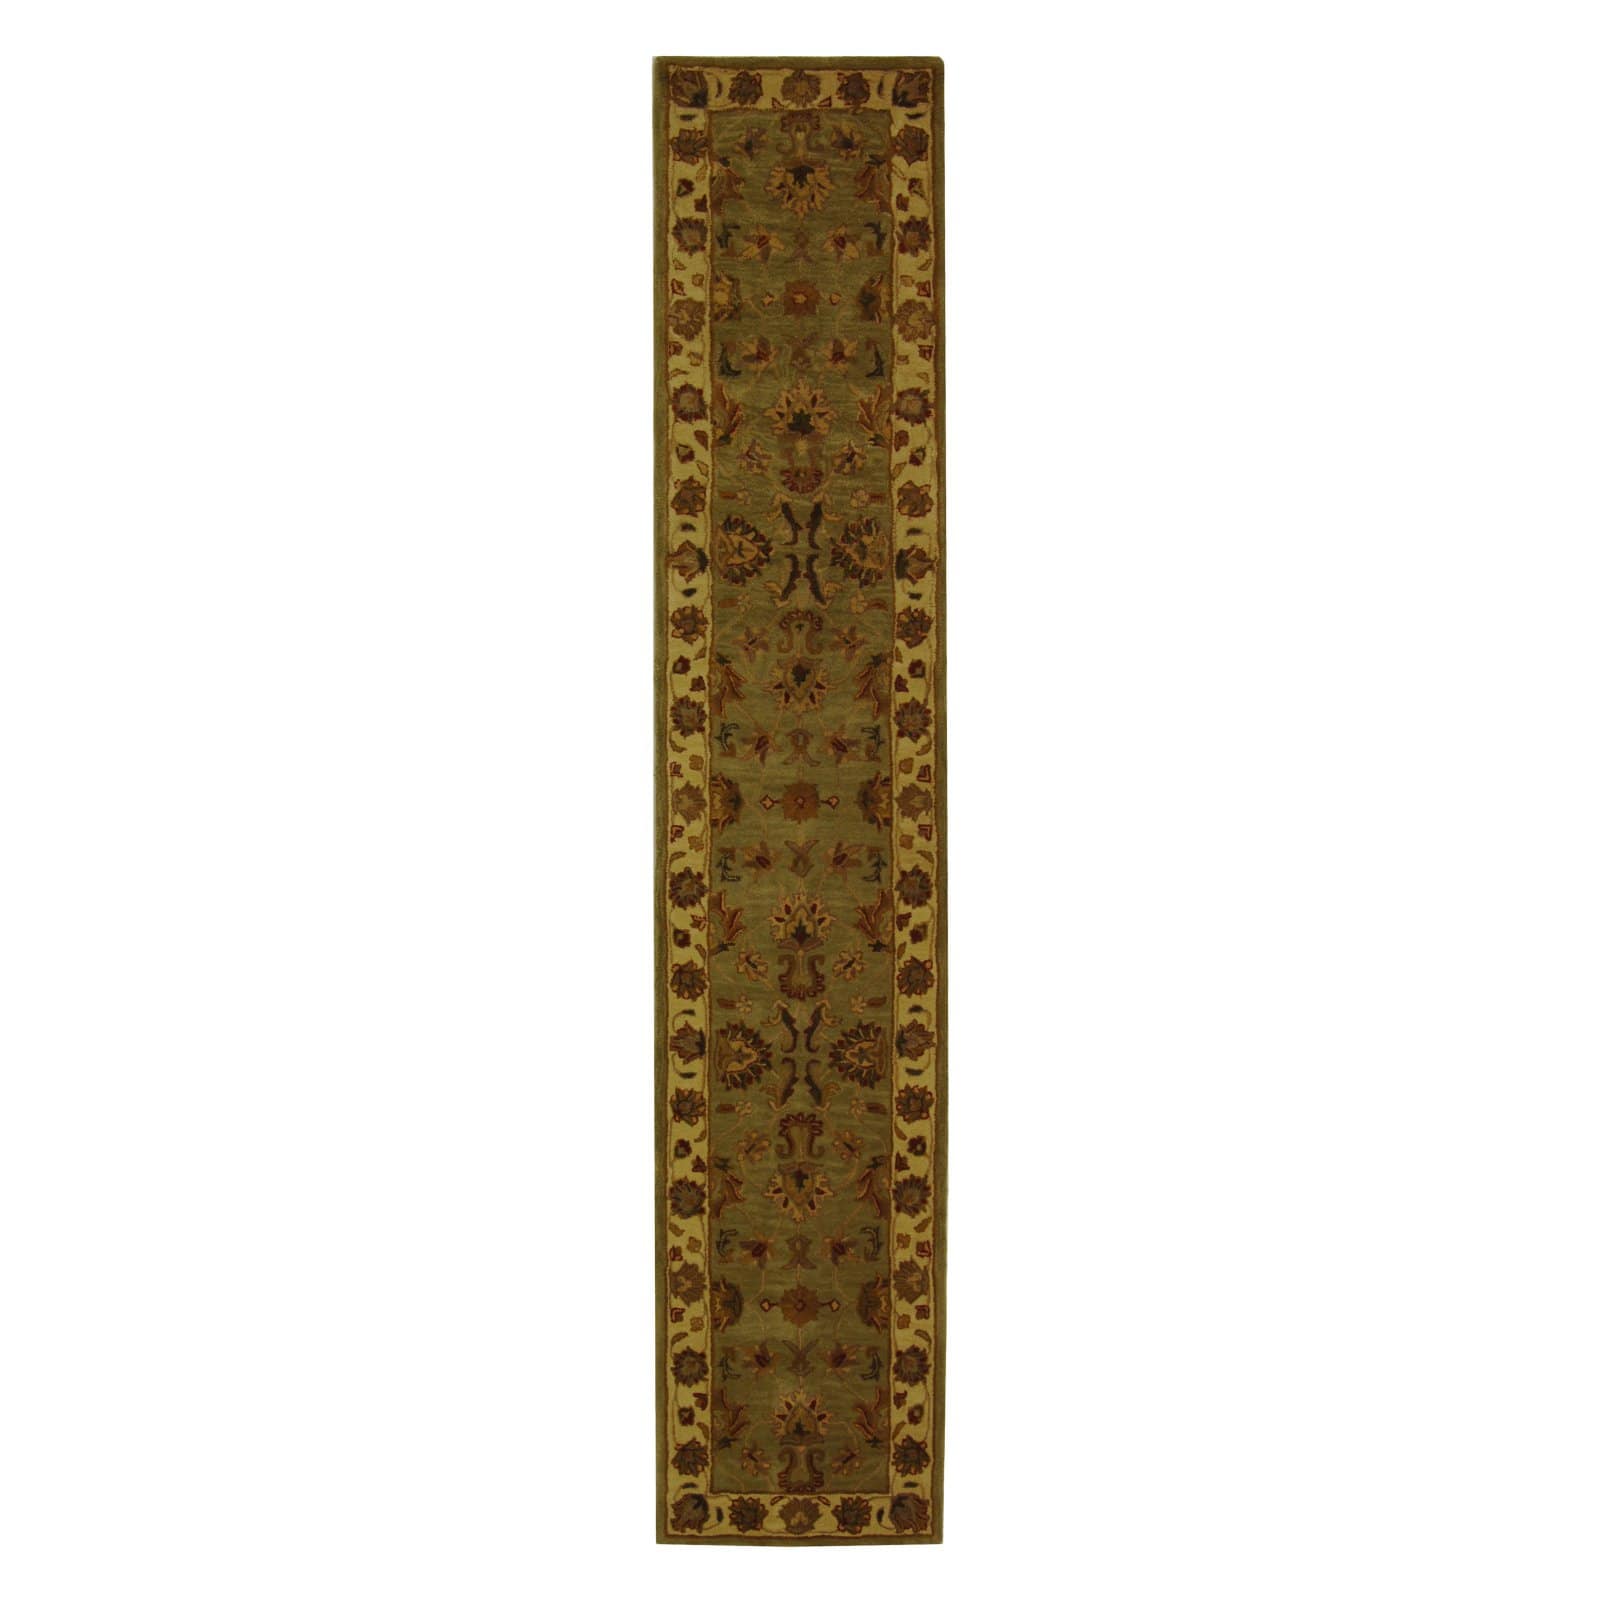 SAFAVIEH Heritage Regis Traditional Wool Area Rug, Green/Gold, 6' x 9' - image 3 of 10